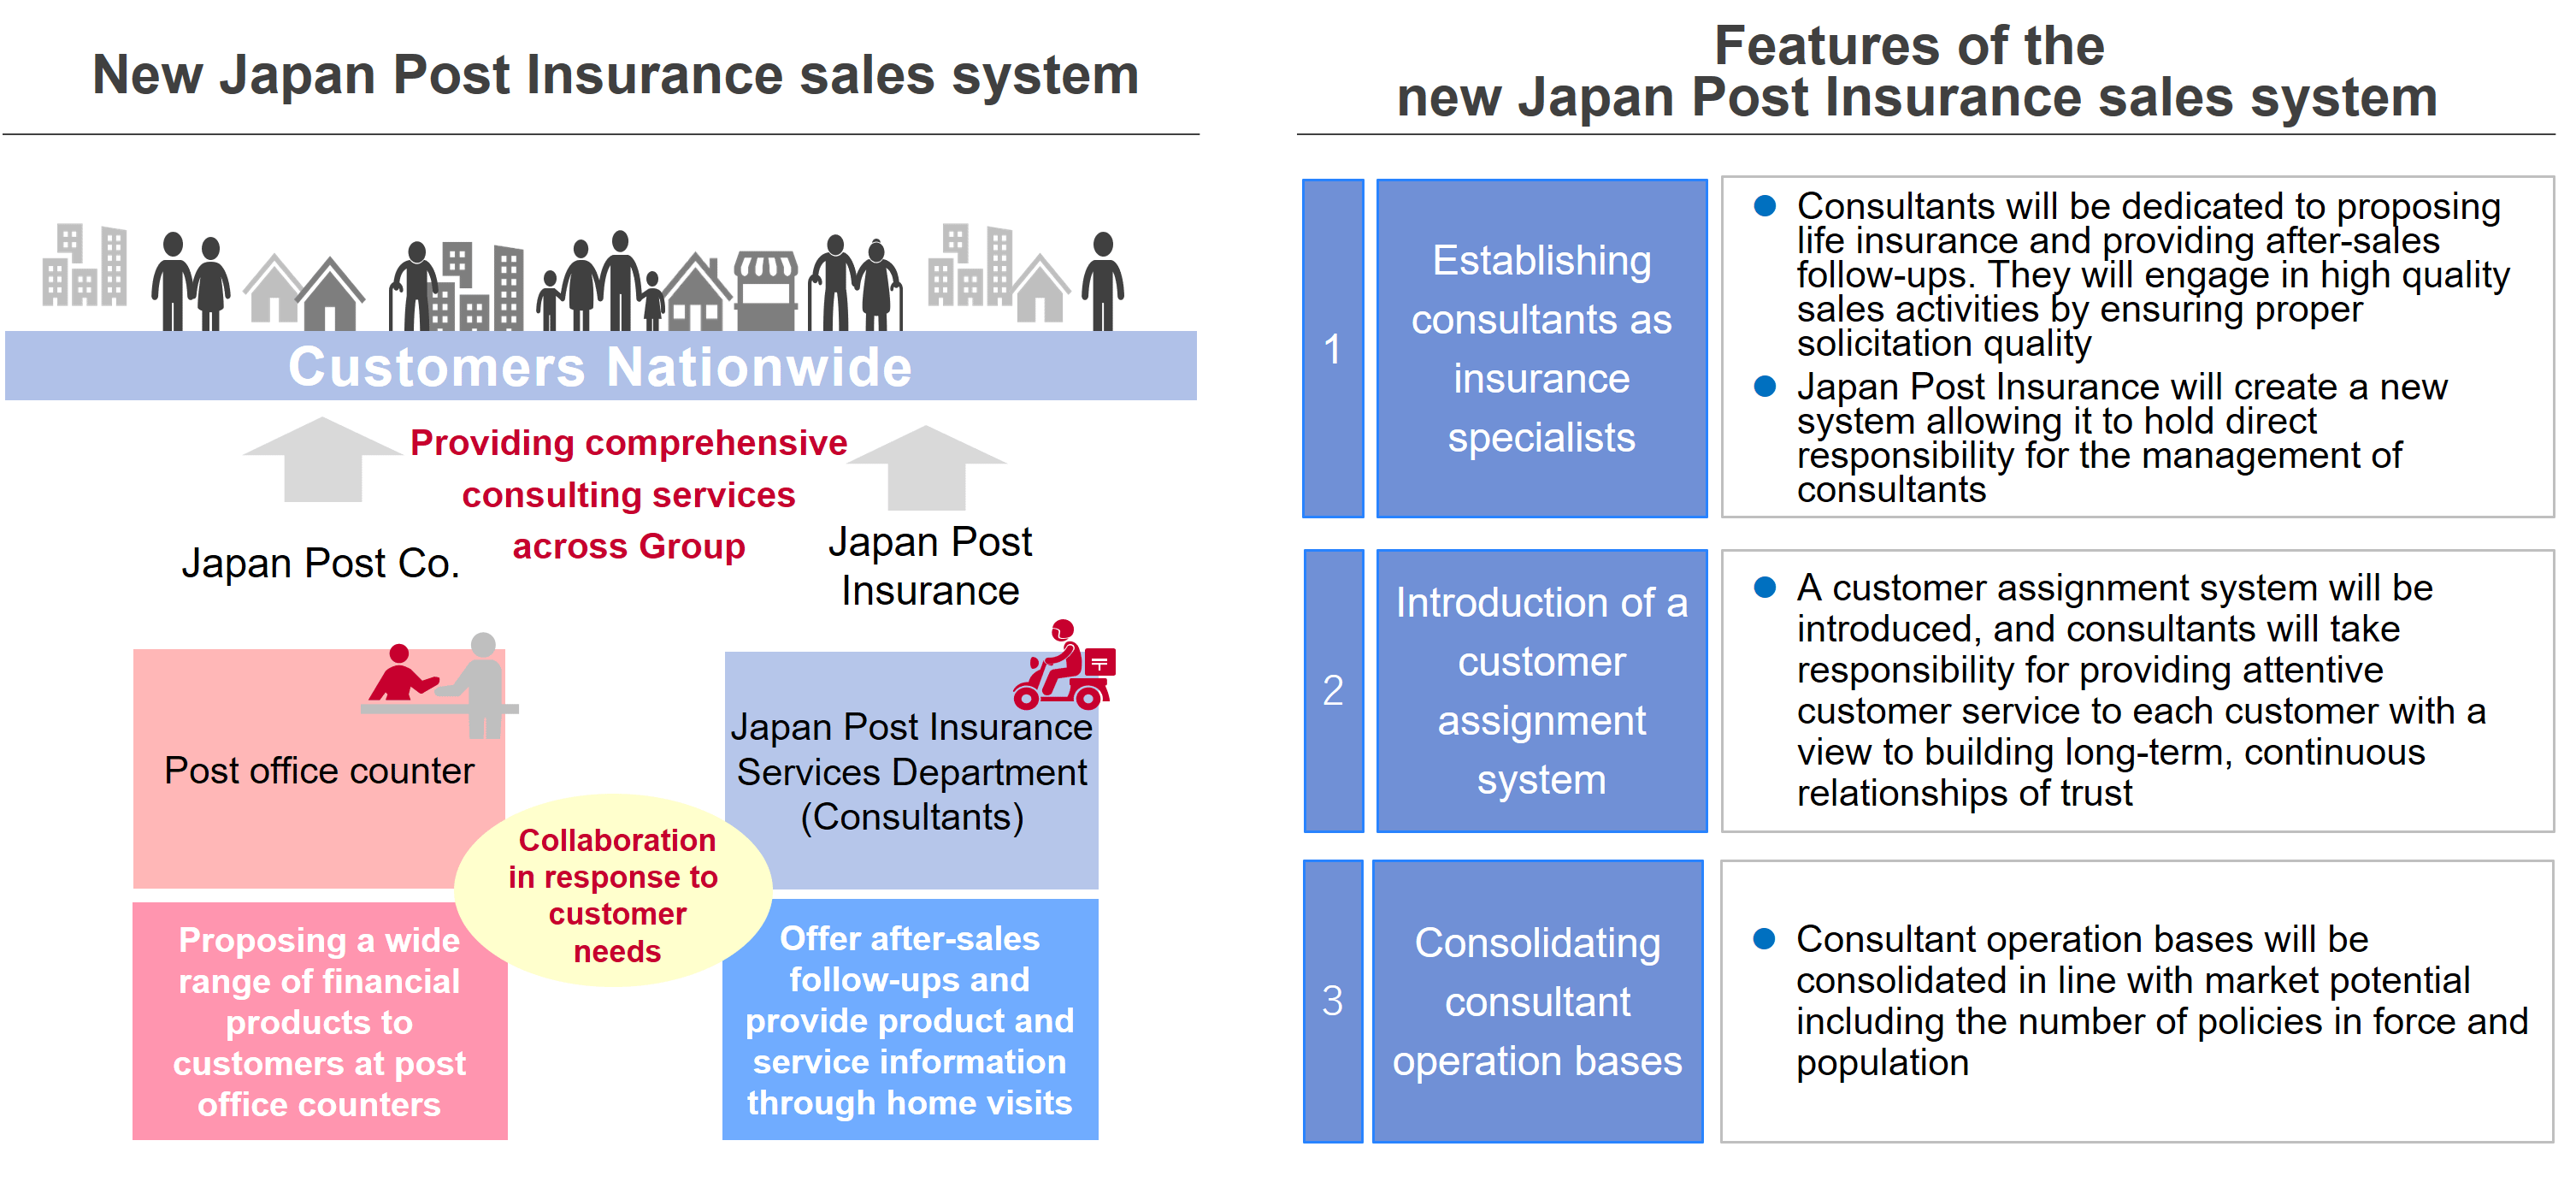 Establishment of new Japan Post Insurance sales system